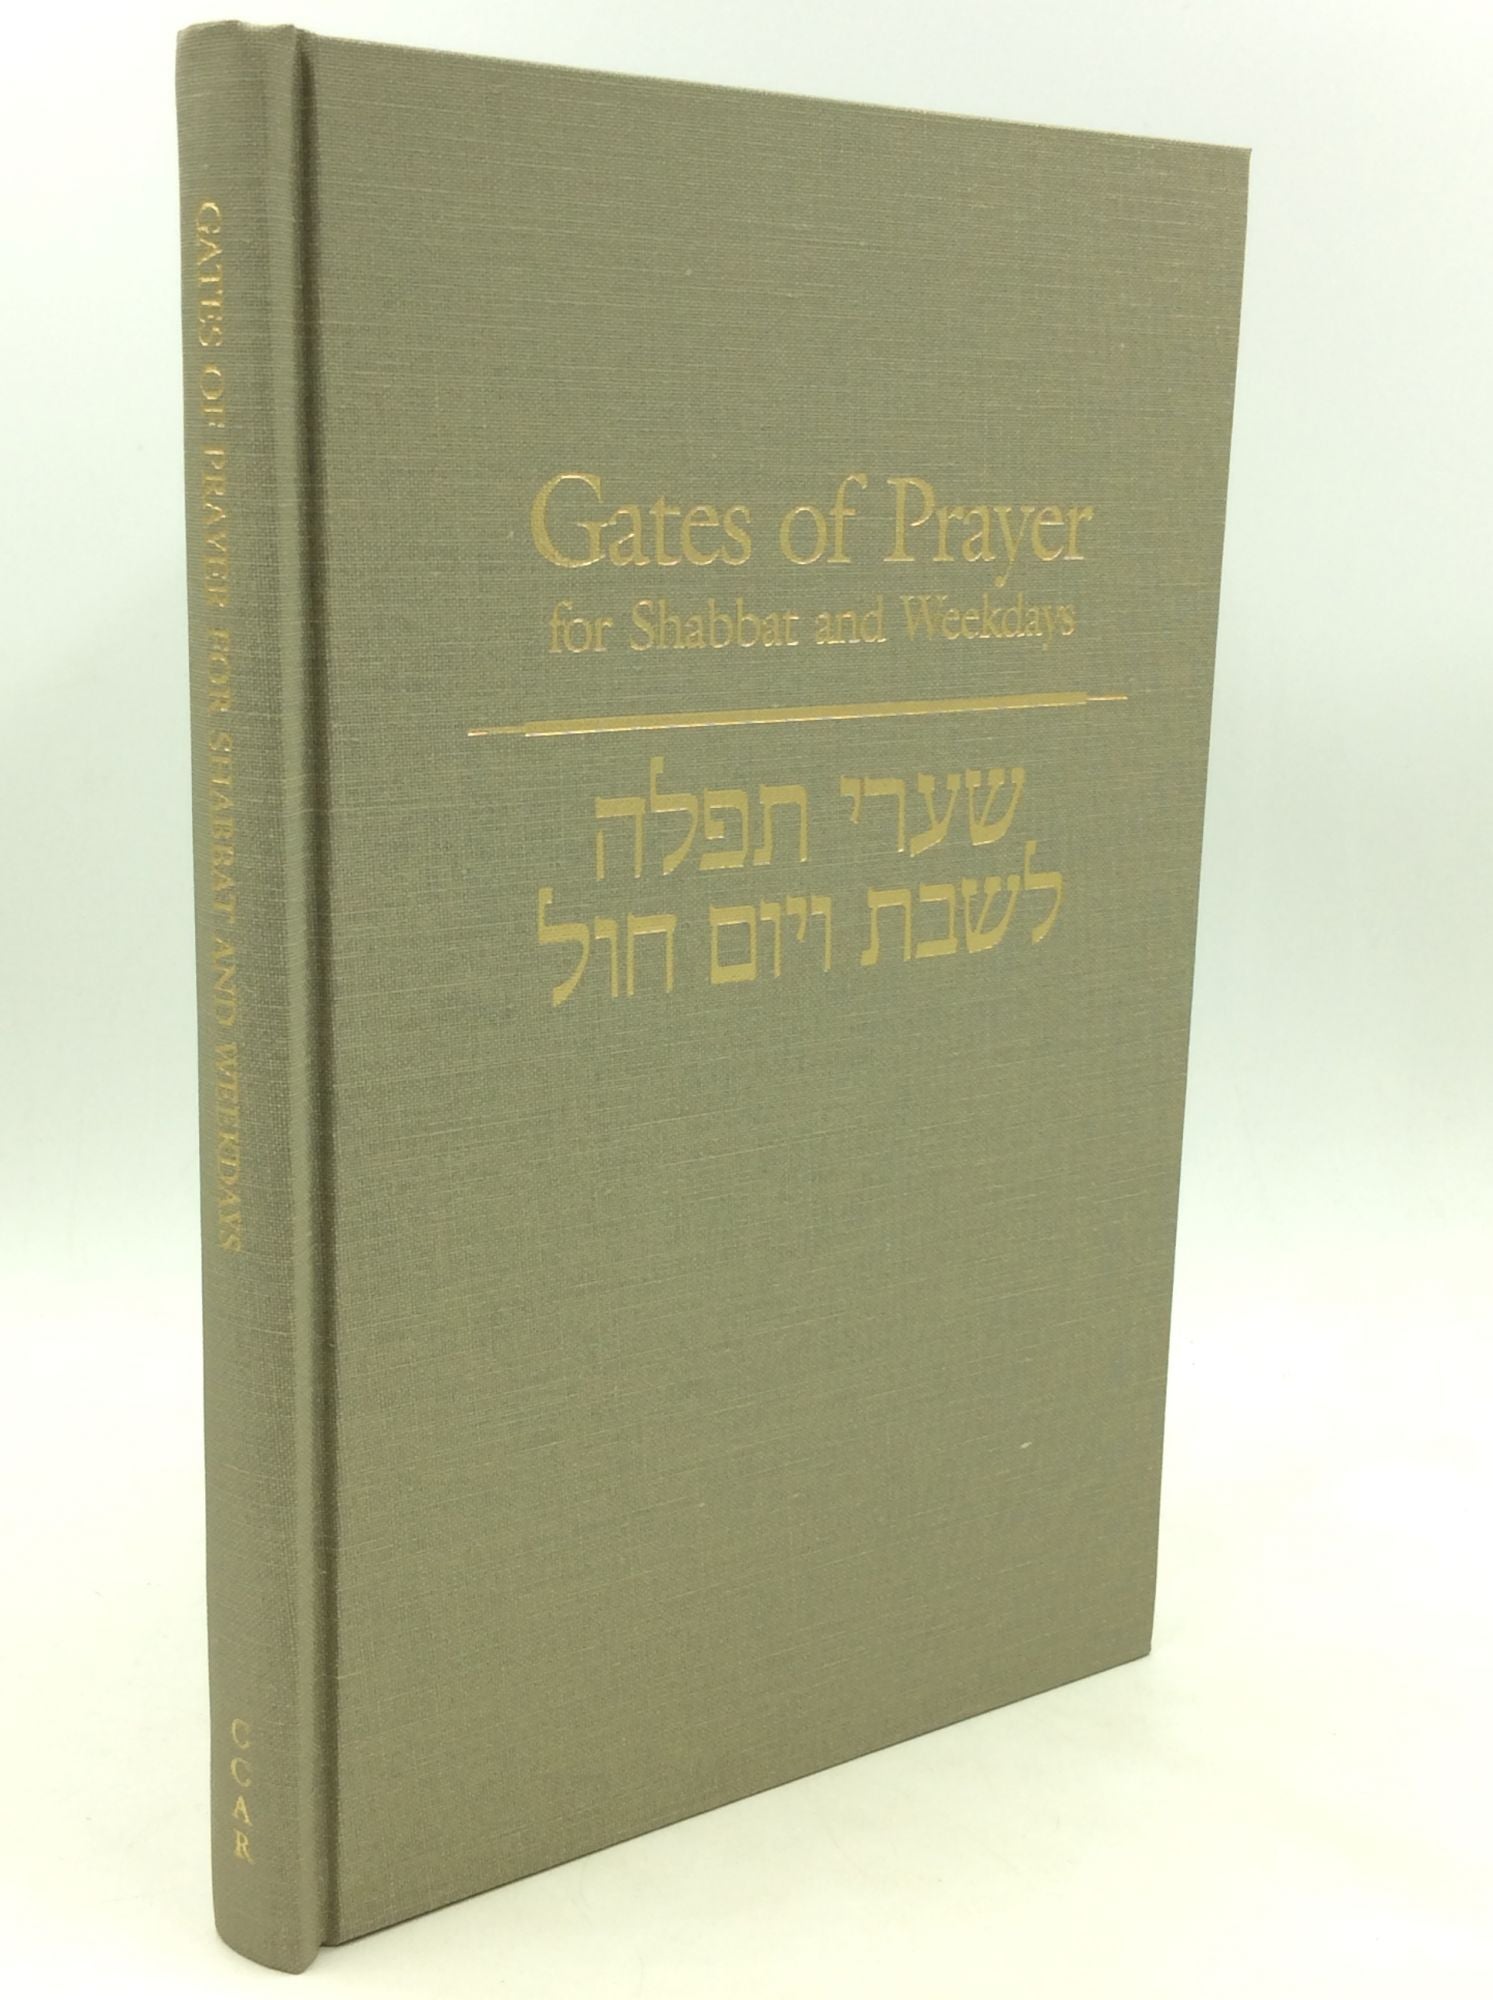 Chaim Stern, ed - Gates of Prayer for Shabbat and Weekdays: A Gender Sensitive Prayerbook